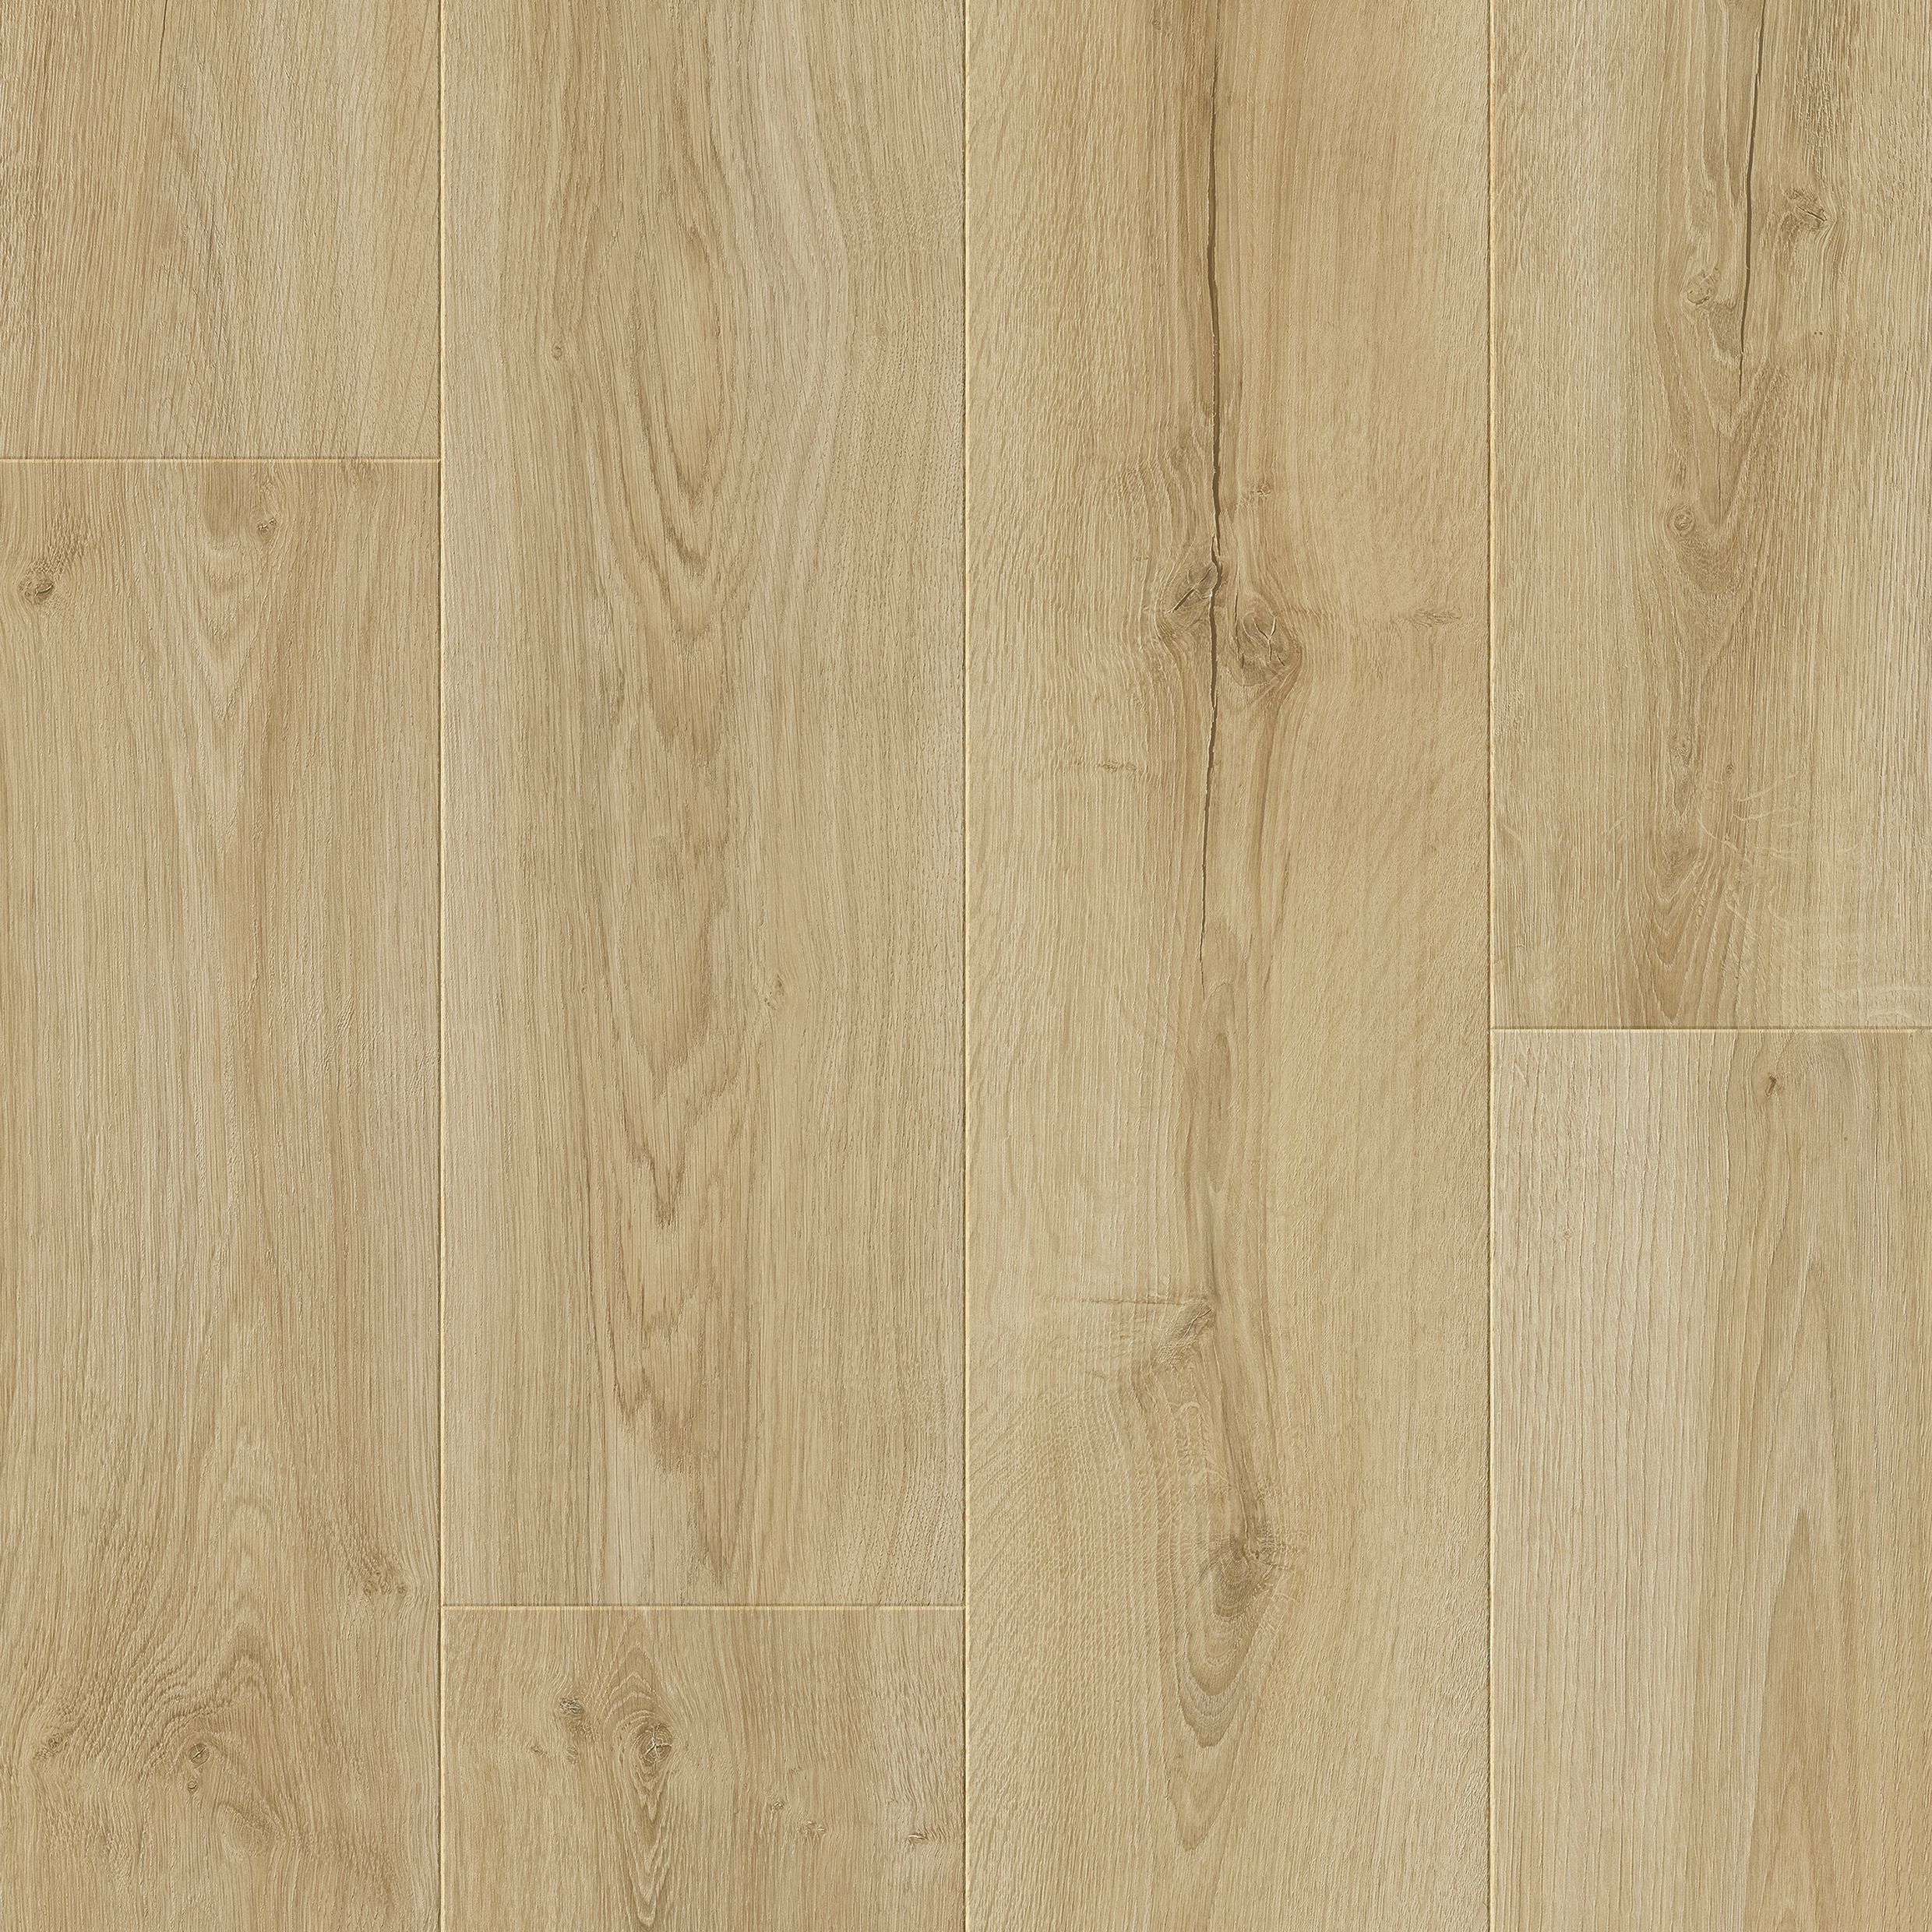 GoodHome Cleobury Parquet look Oak effect Laminate Flooring, 1.69m²